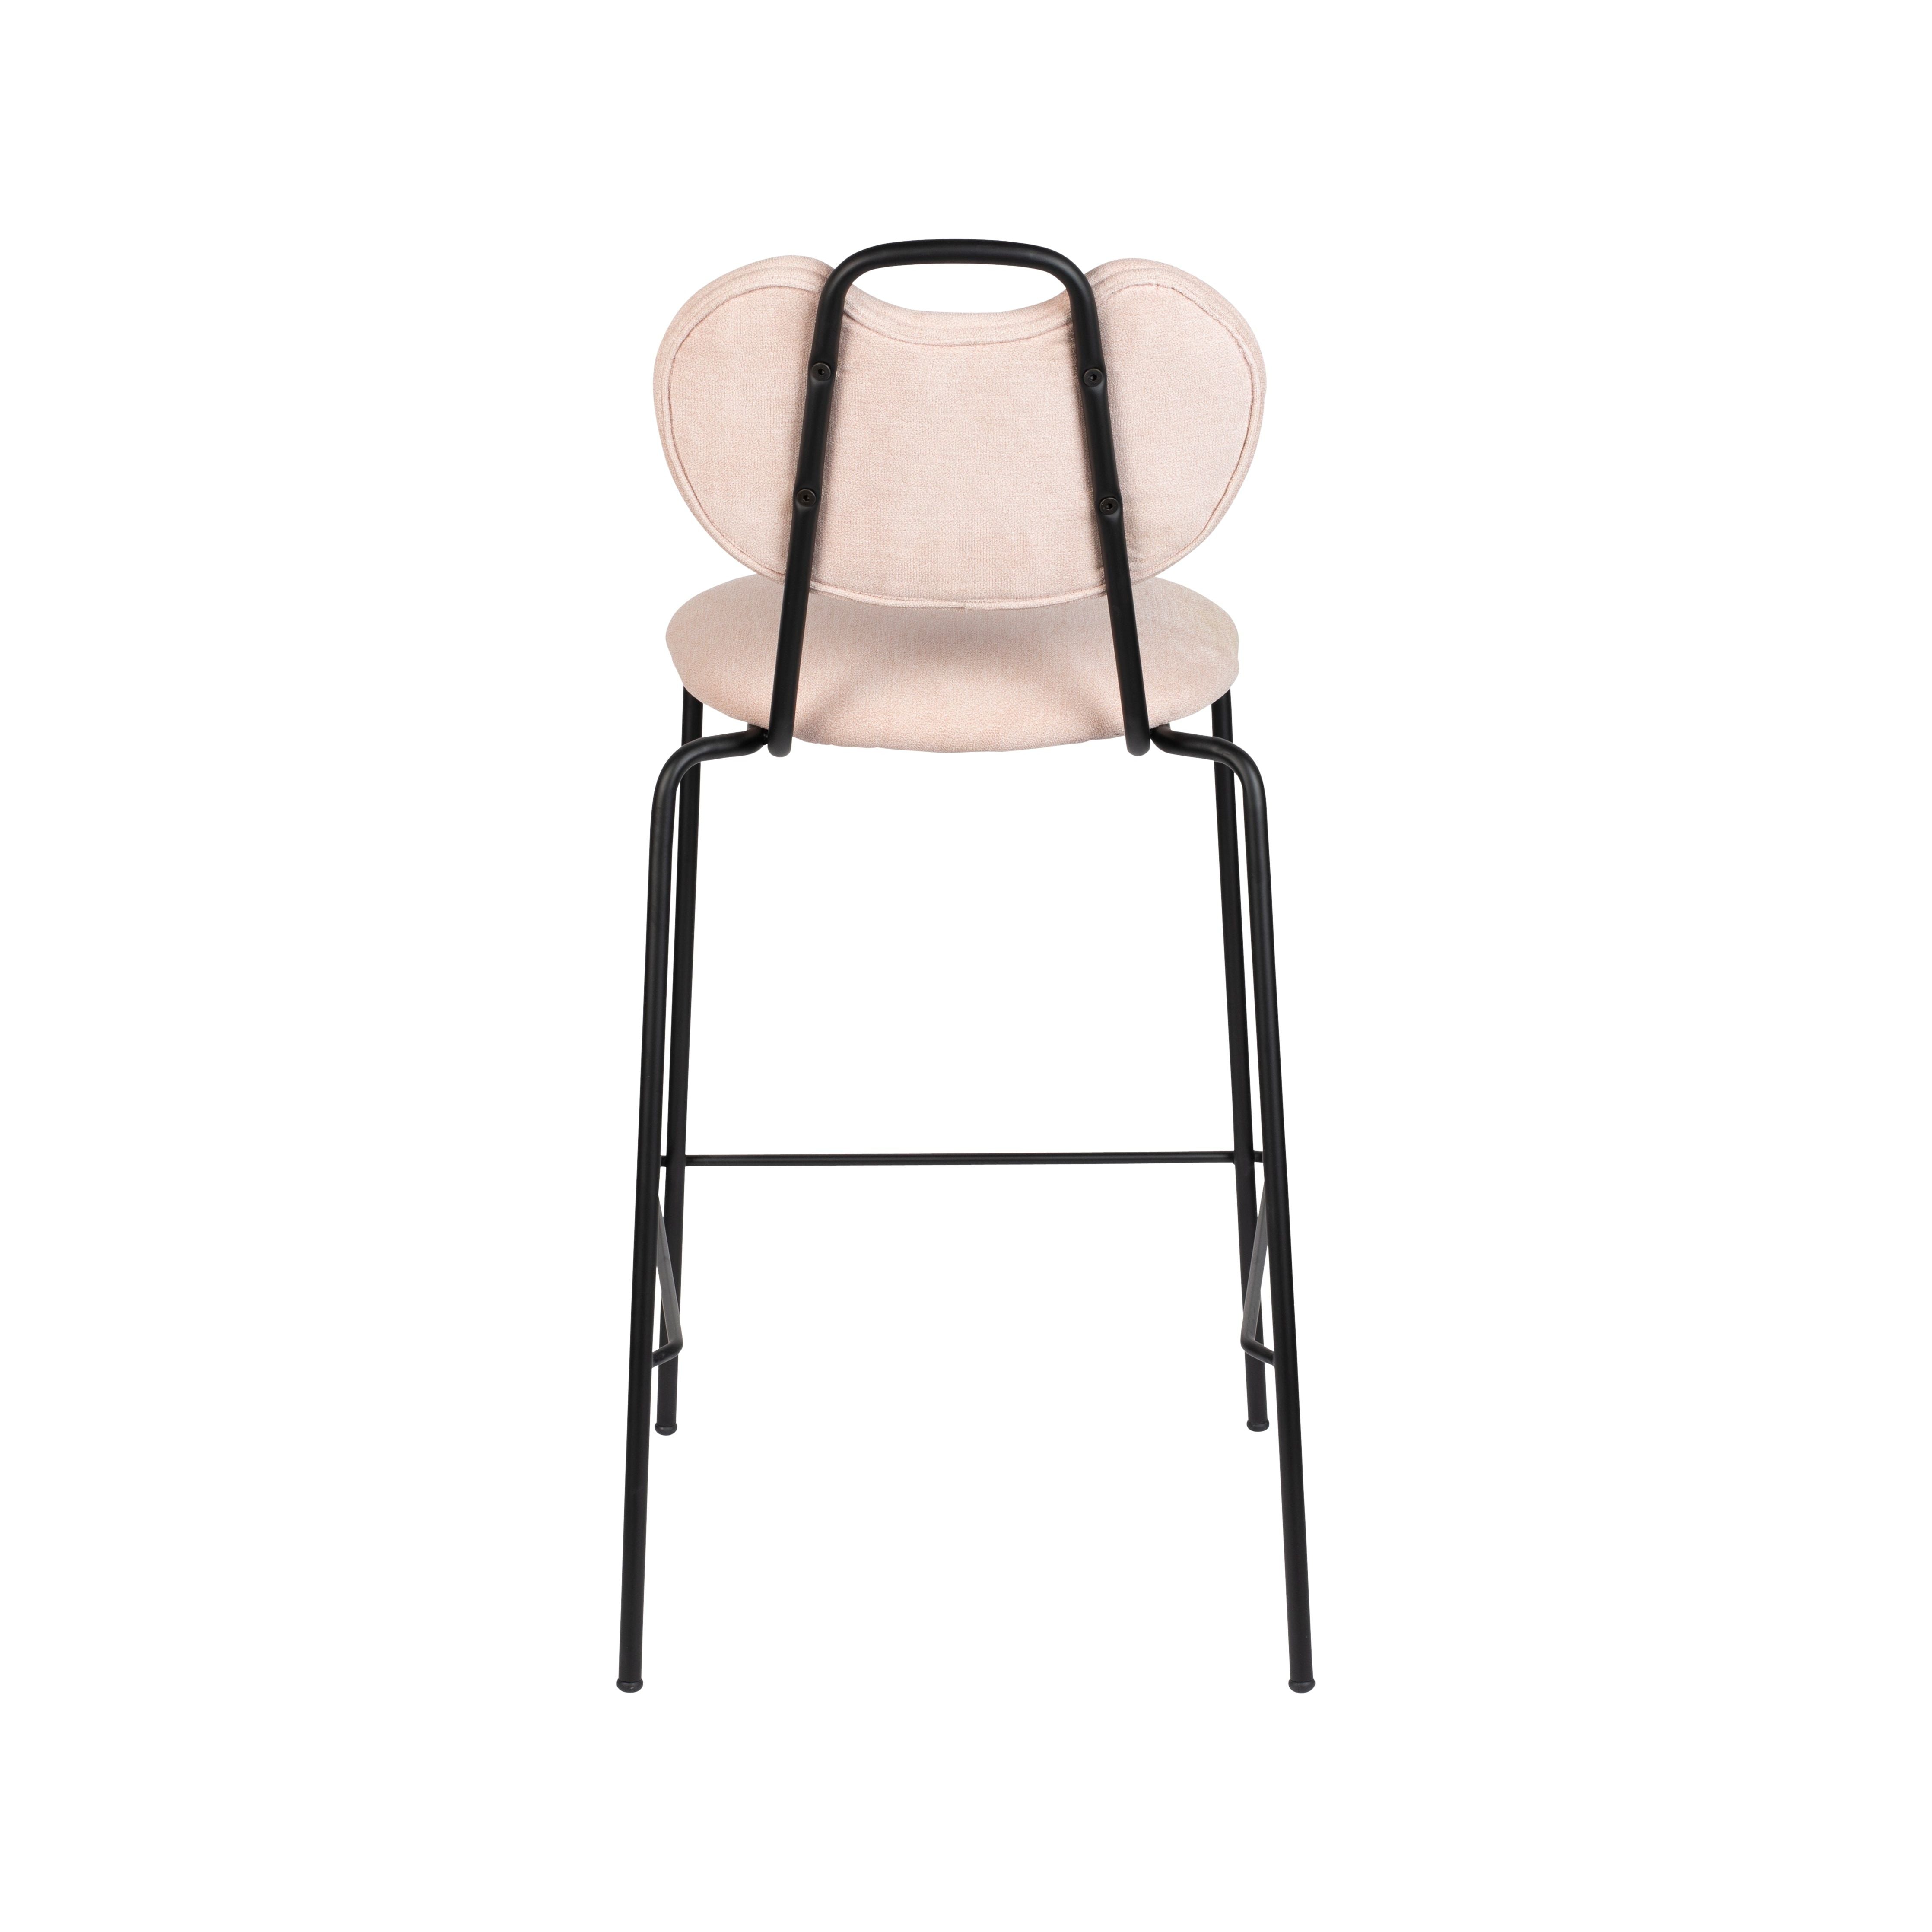 Bar stool aspen light pink